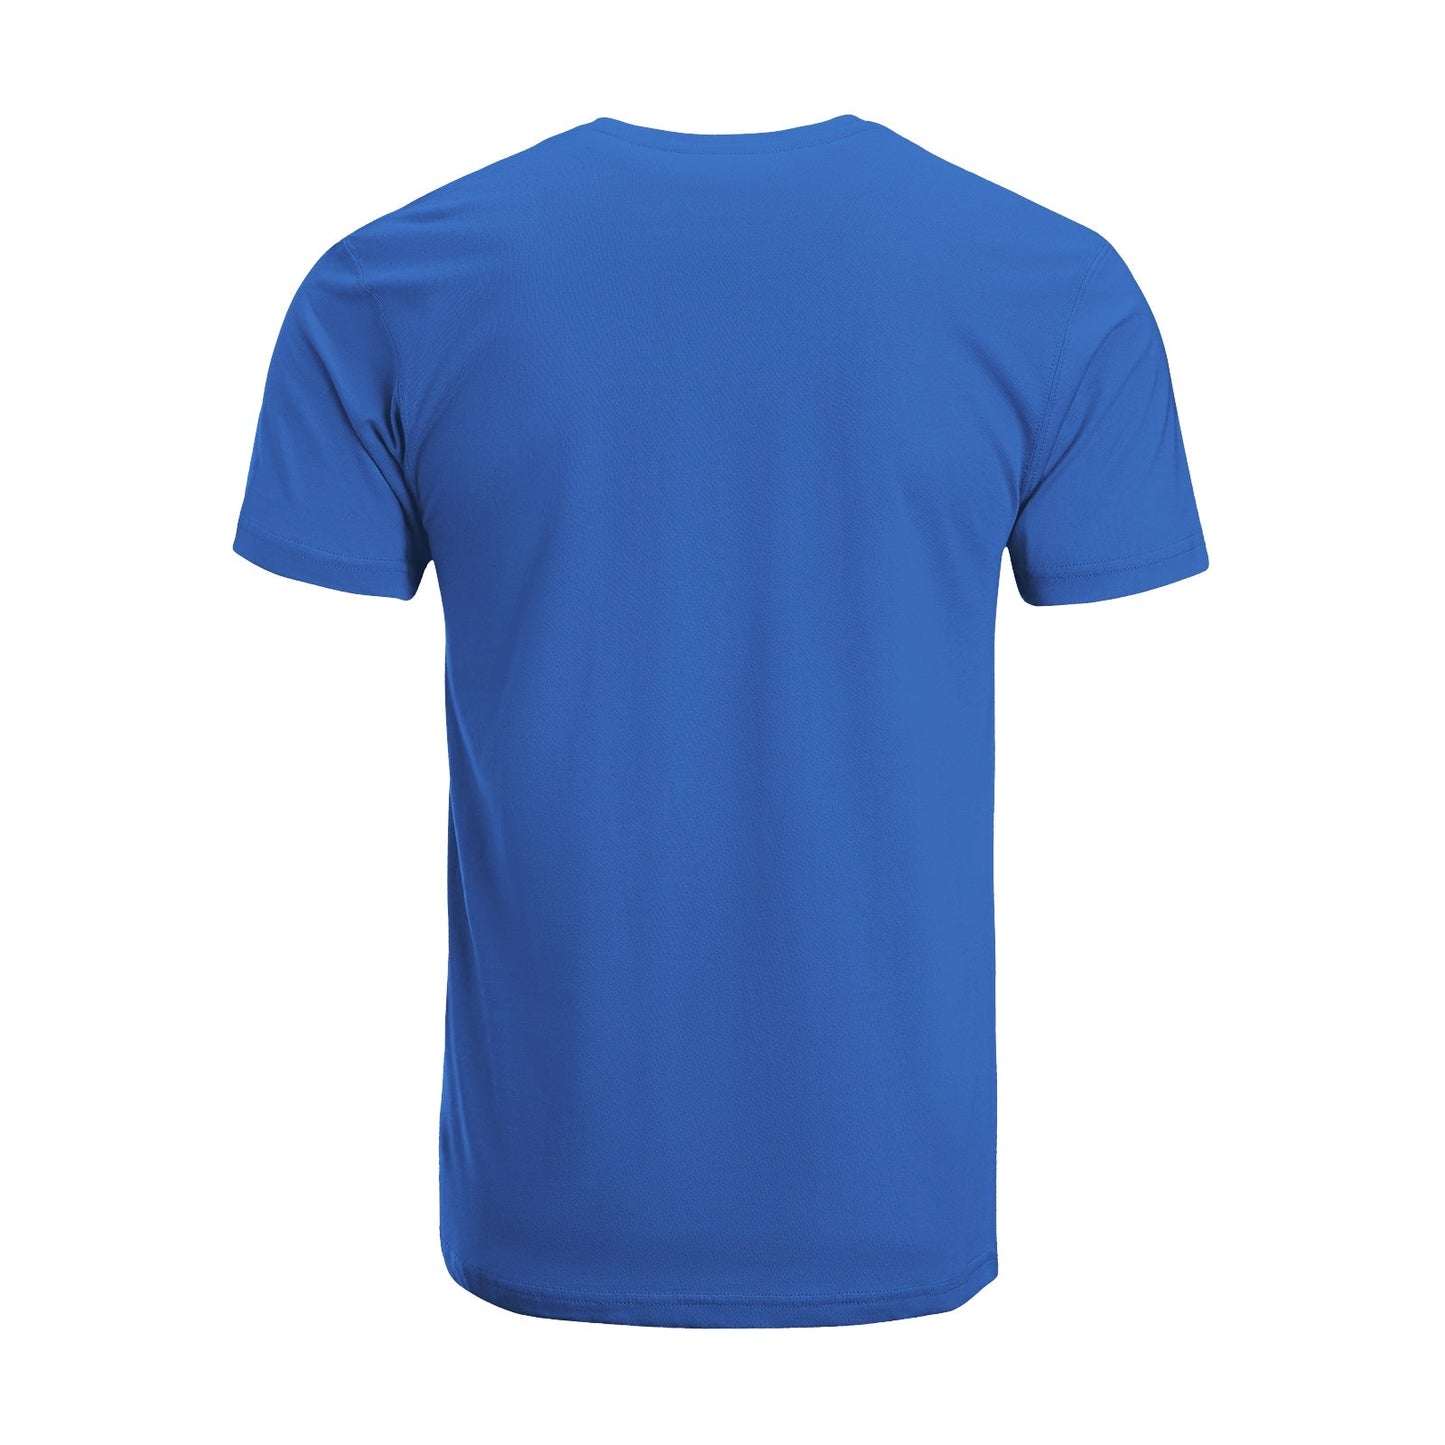 Unisex Short Sleeve Crew Neck Cotton Jersey T-Shirt VEGAN 15